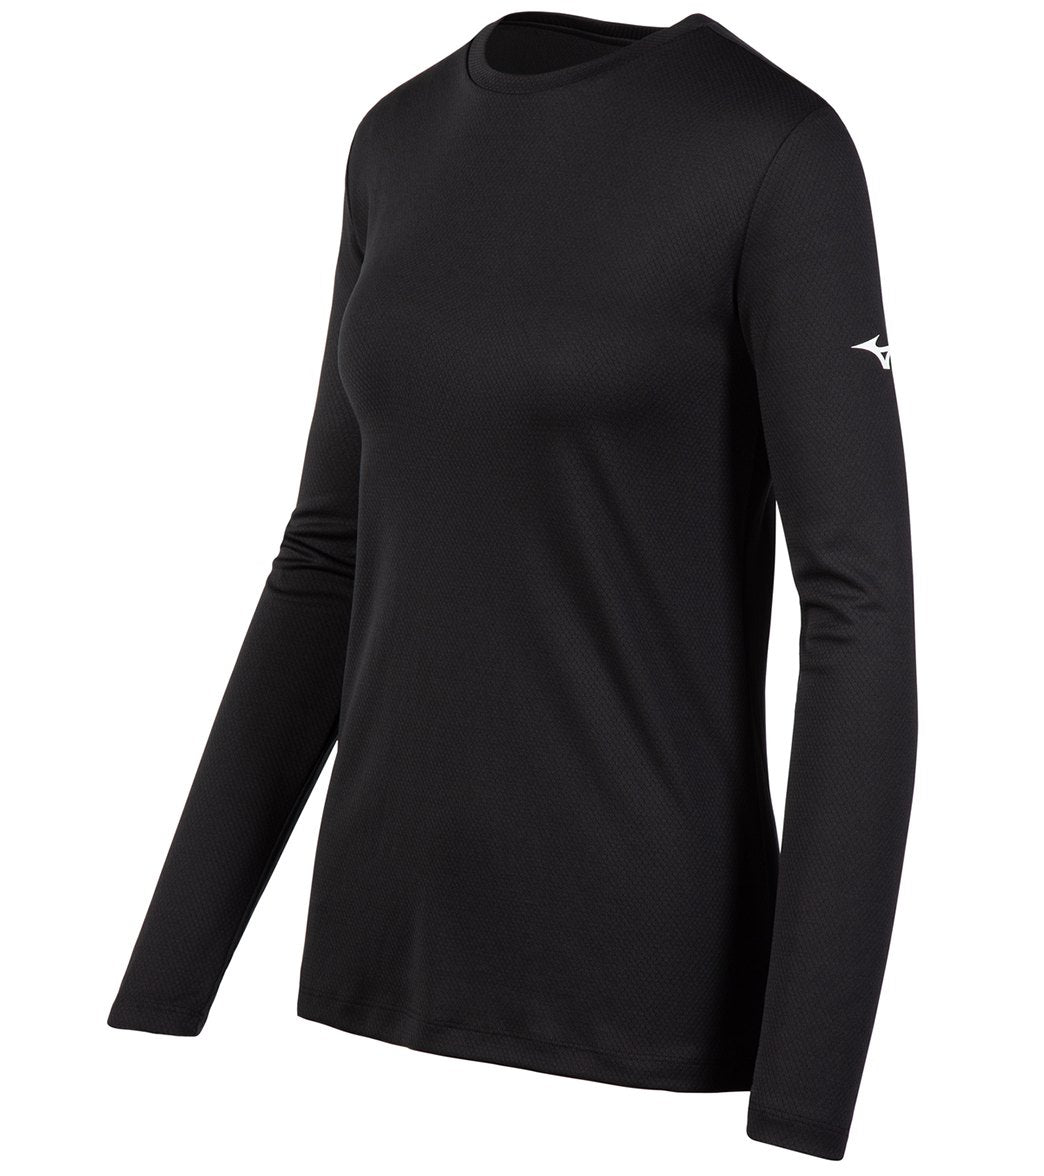 Mizuno Women's Long Sleeve Tee Shirt - Black Large Polyester - Swimoutlet.com